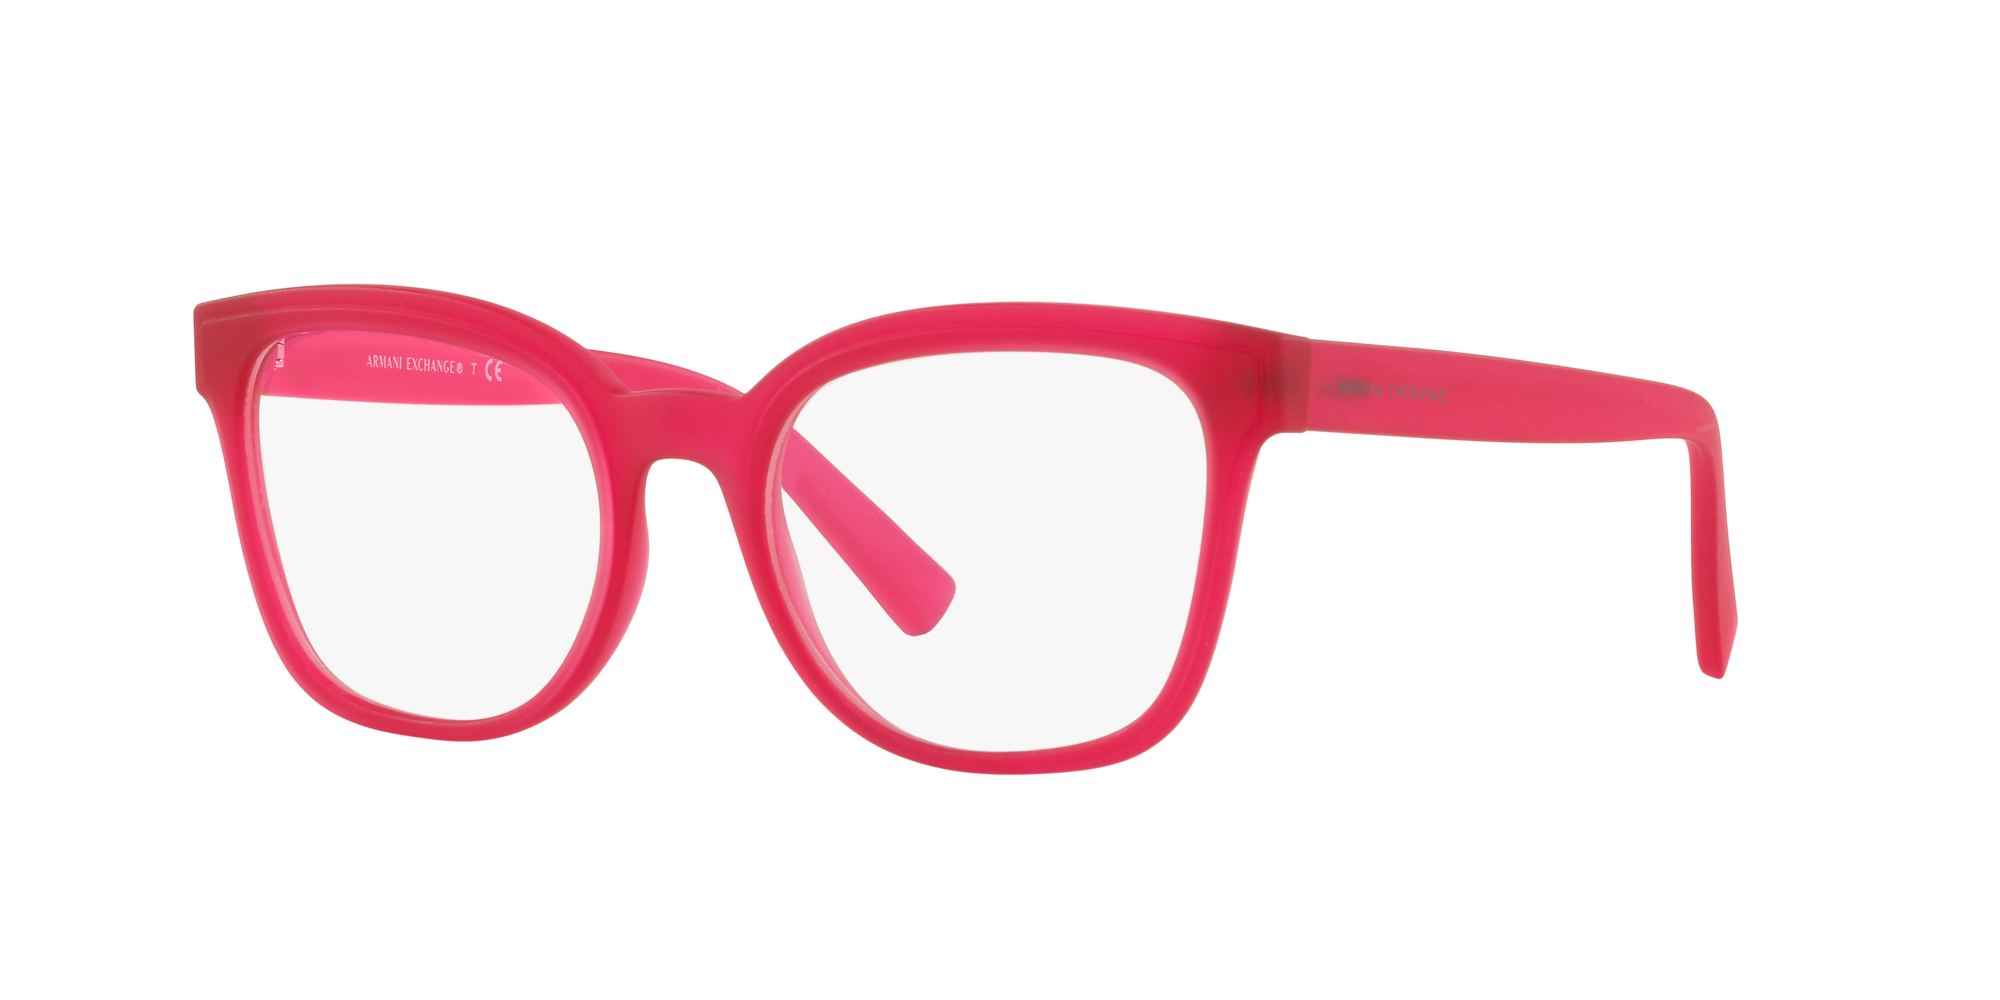 Top 31+ imagen pink armani exchange glasses